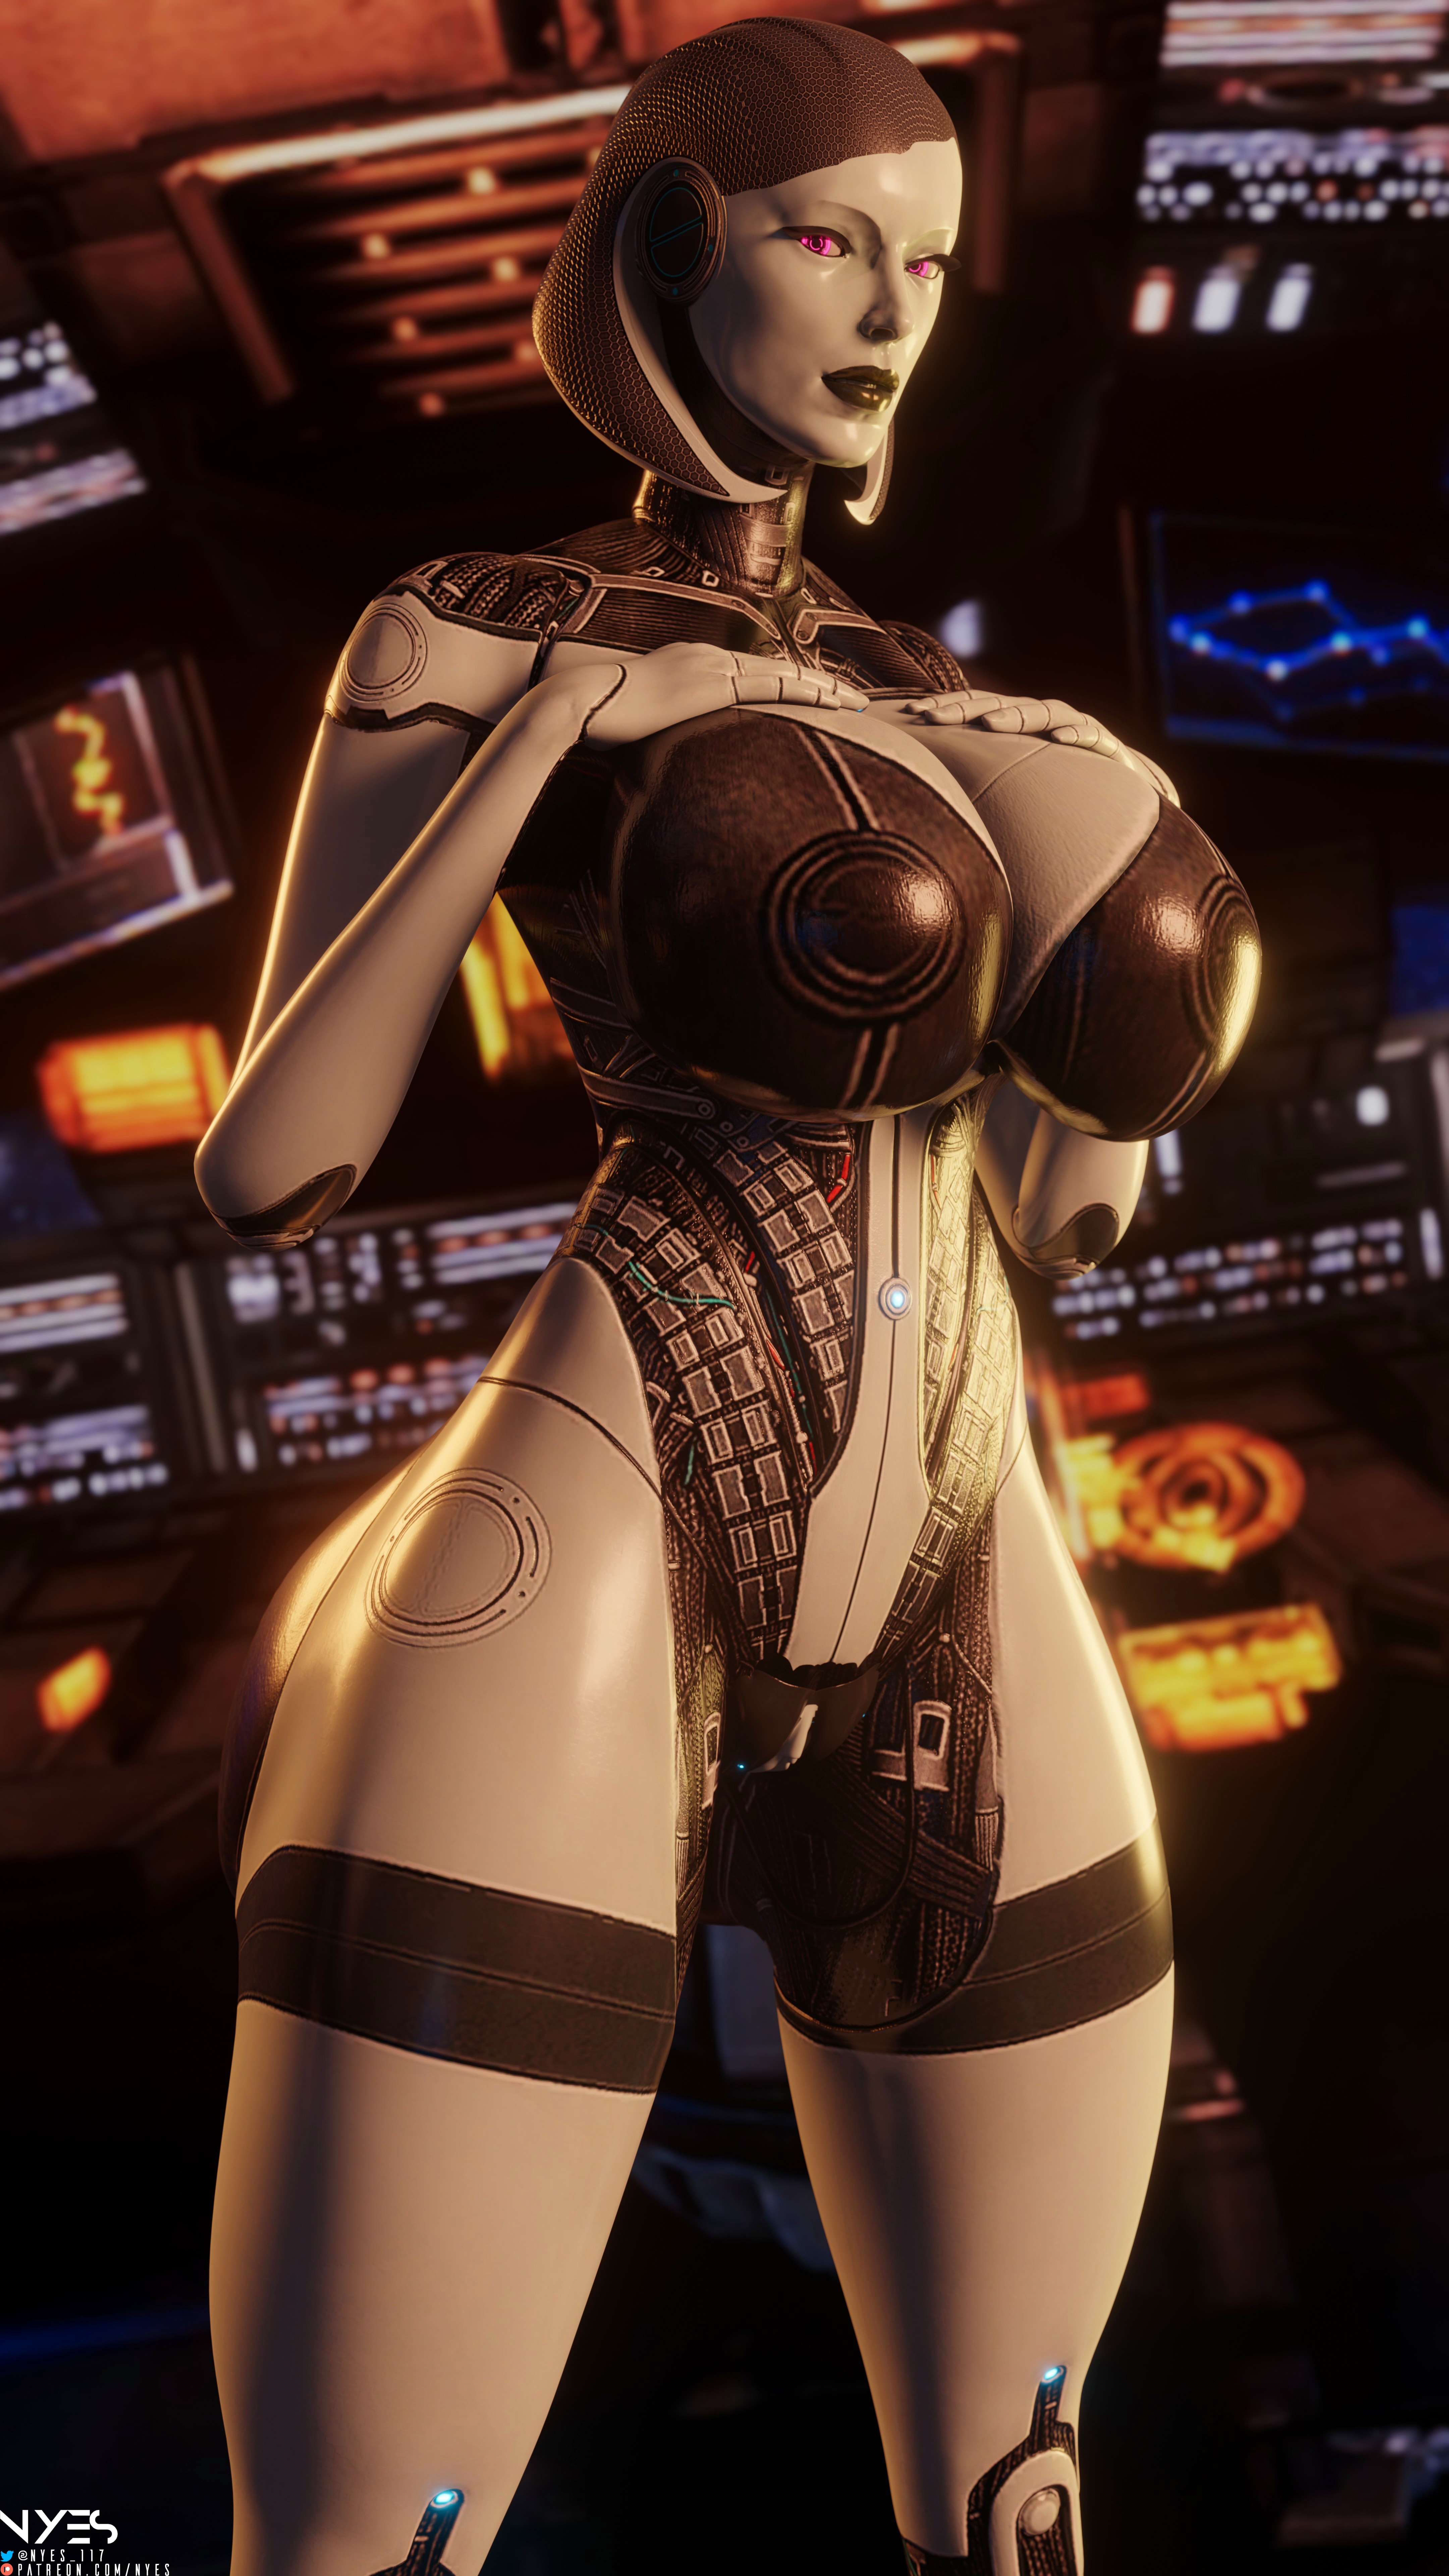 EDI (8K) Mass Effect Edi Big Tits Big Ass Pinup Big Breasts